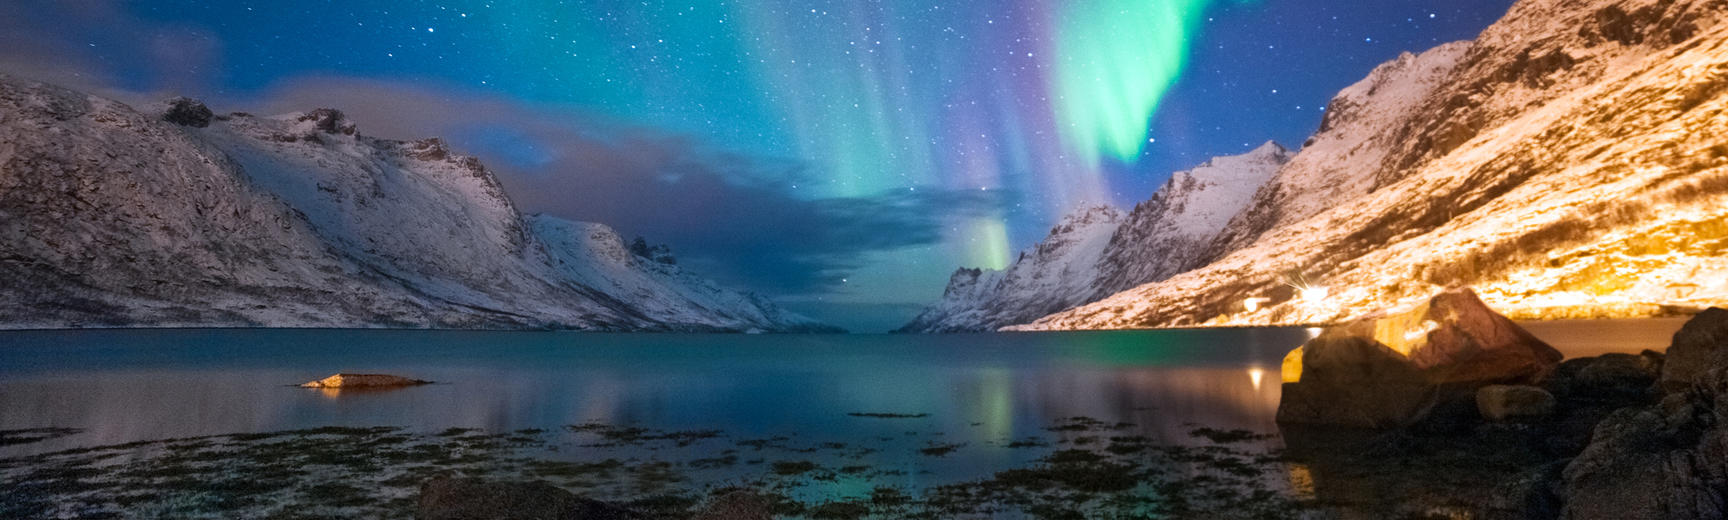 Aurora Borealis over the Norwegian coast